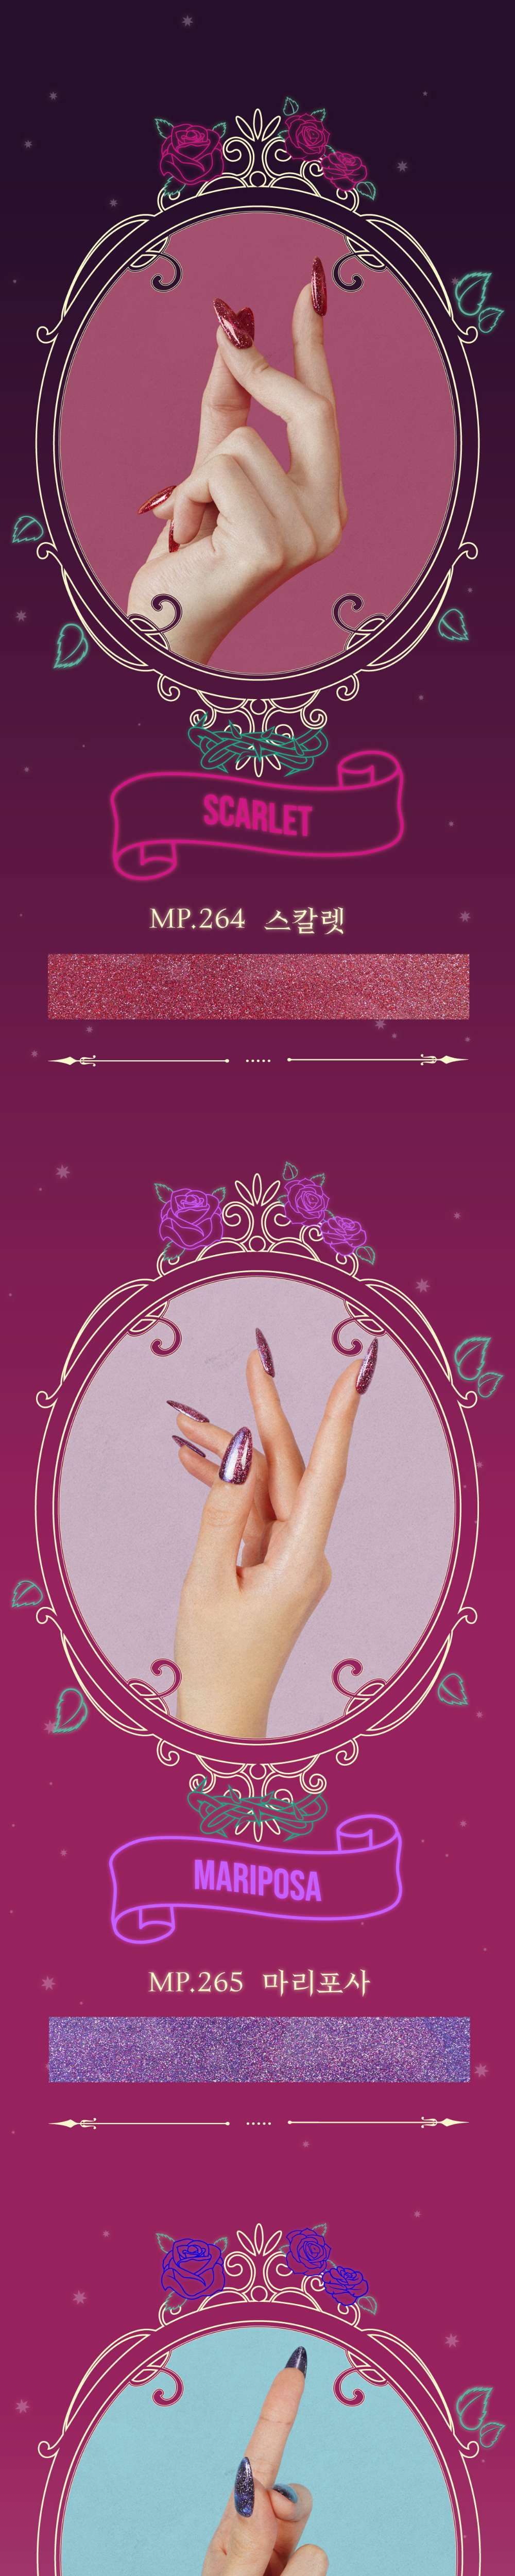 accessories purple color image-S1L2